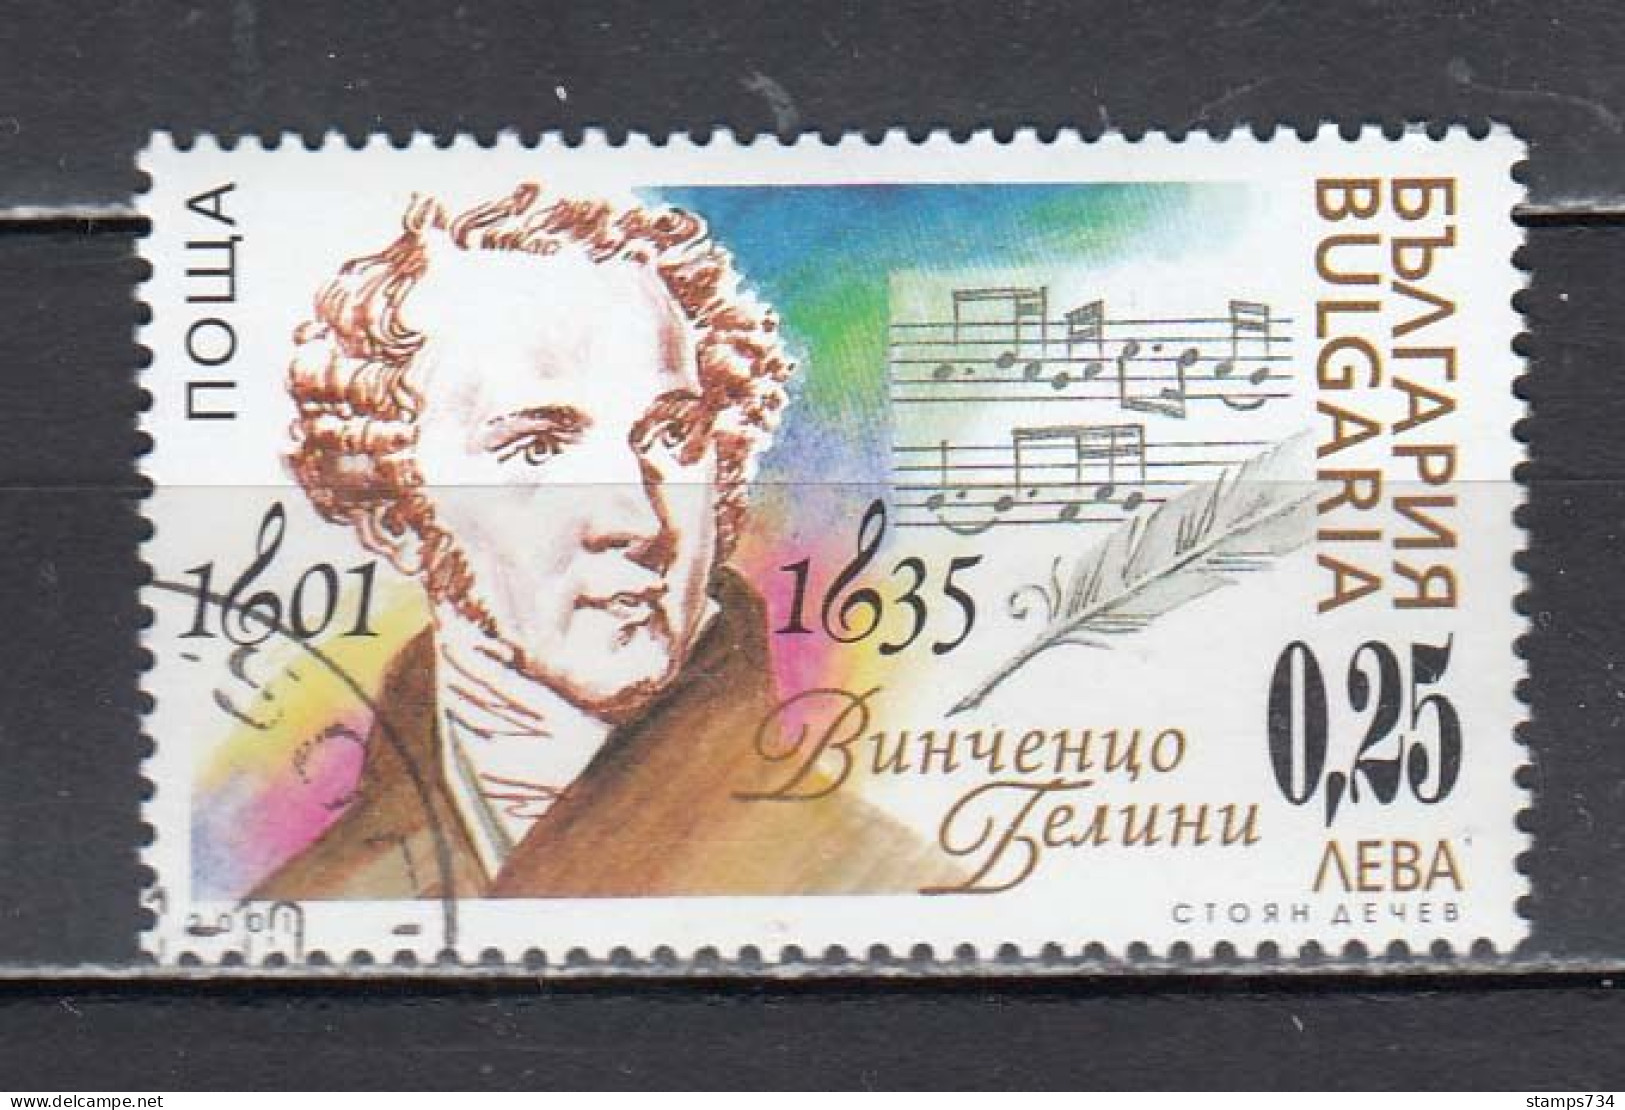 Bulgaria 2001 - 200th Birthday Of Vincenzo Bellini, Italian Composer, Mi-Nr. 4538, Used - Usados